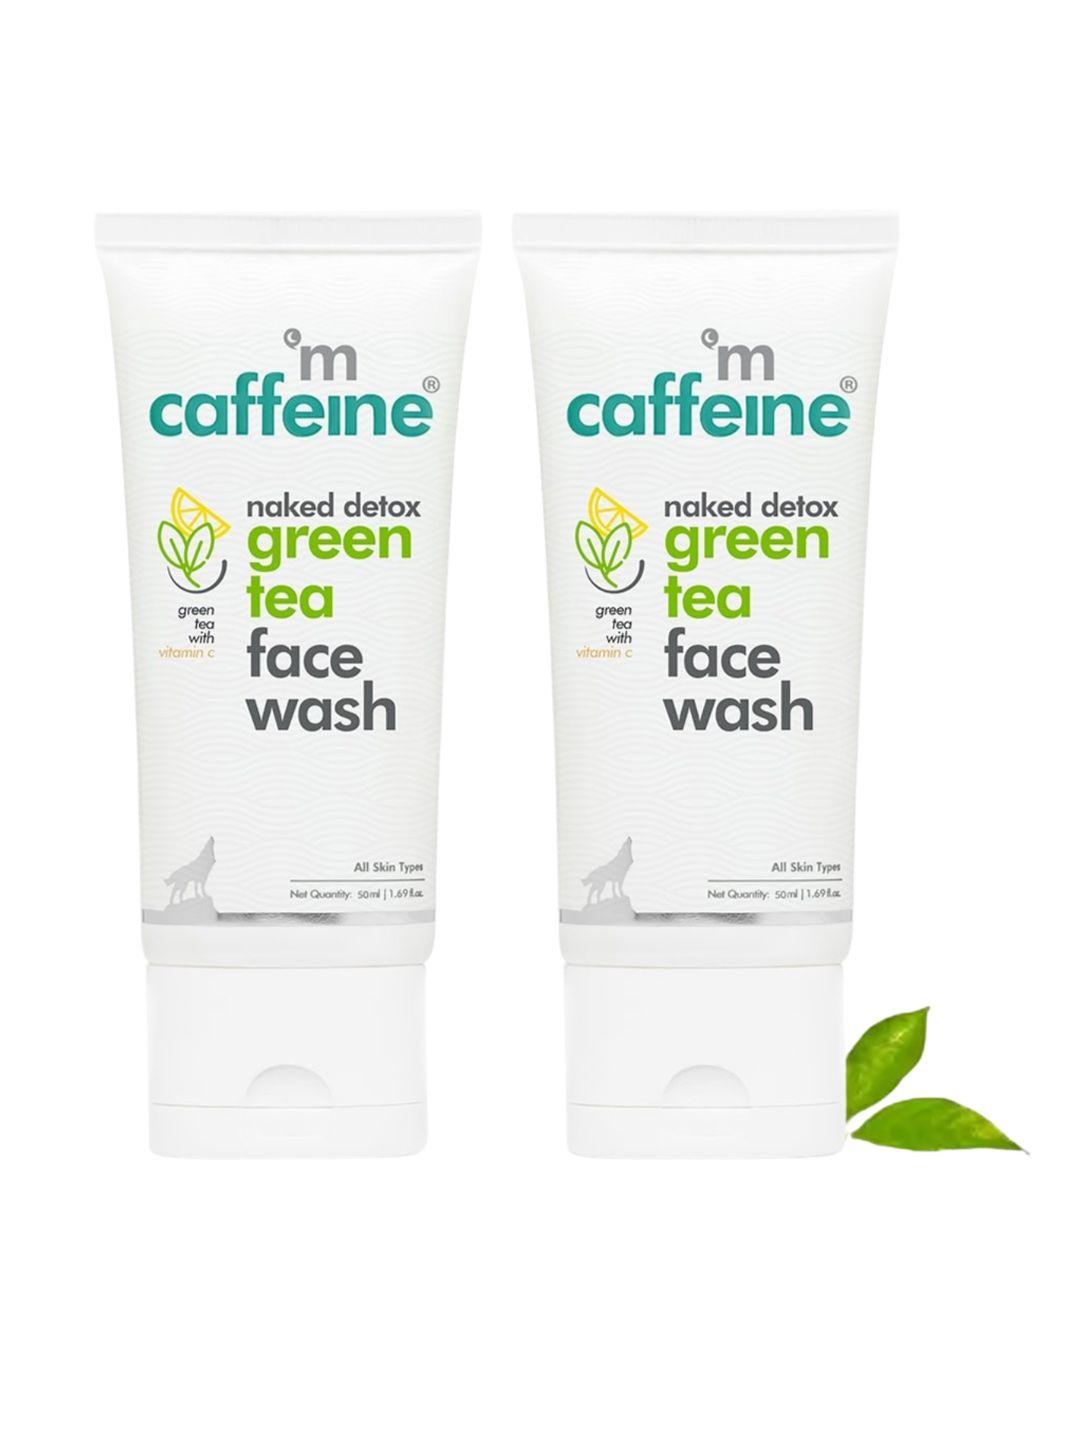 mcaffeine 2-pcs green tea face wash with hyaluronic acid - 50ml each